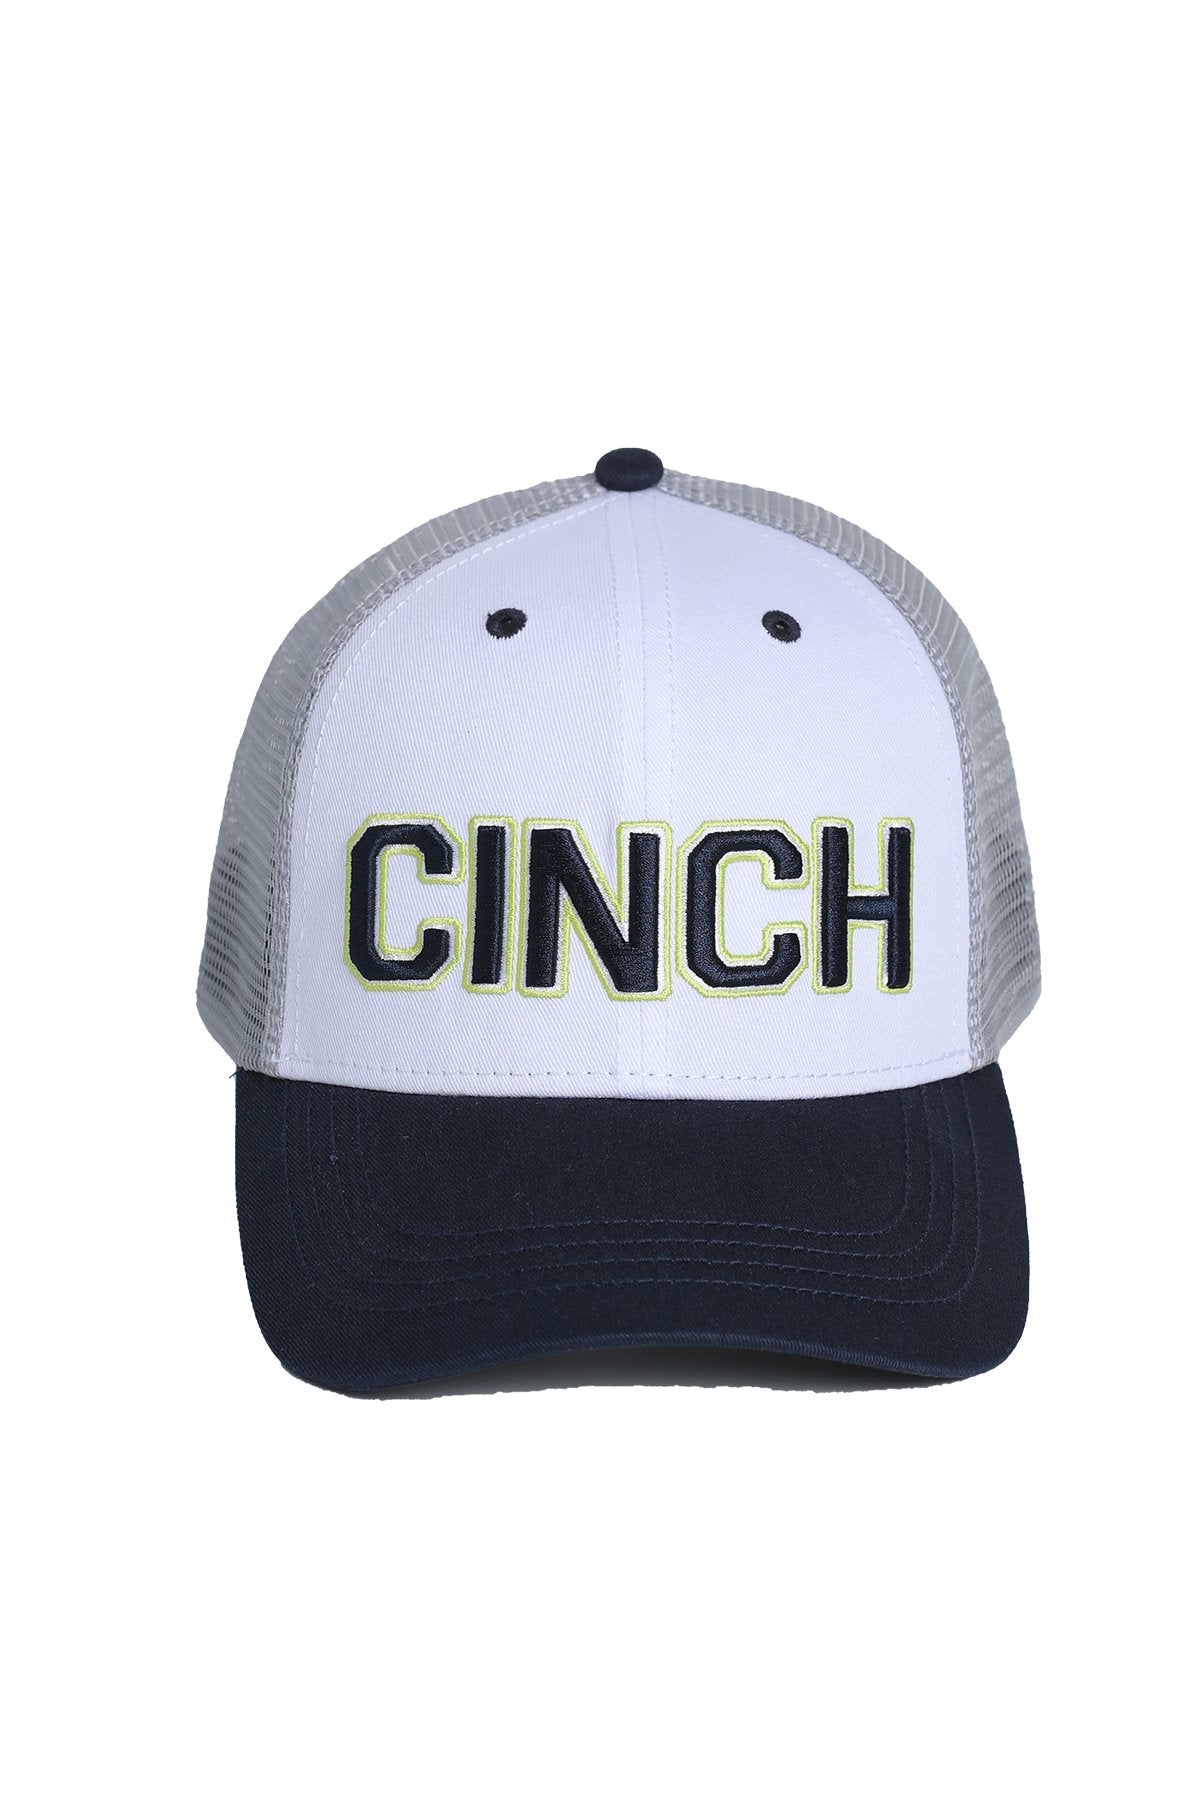 Cinch Mens Trucker Cap - Navy/White